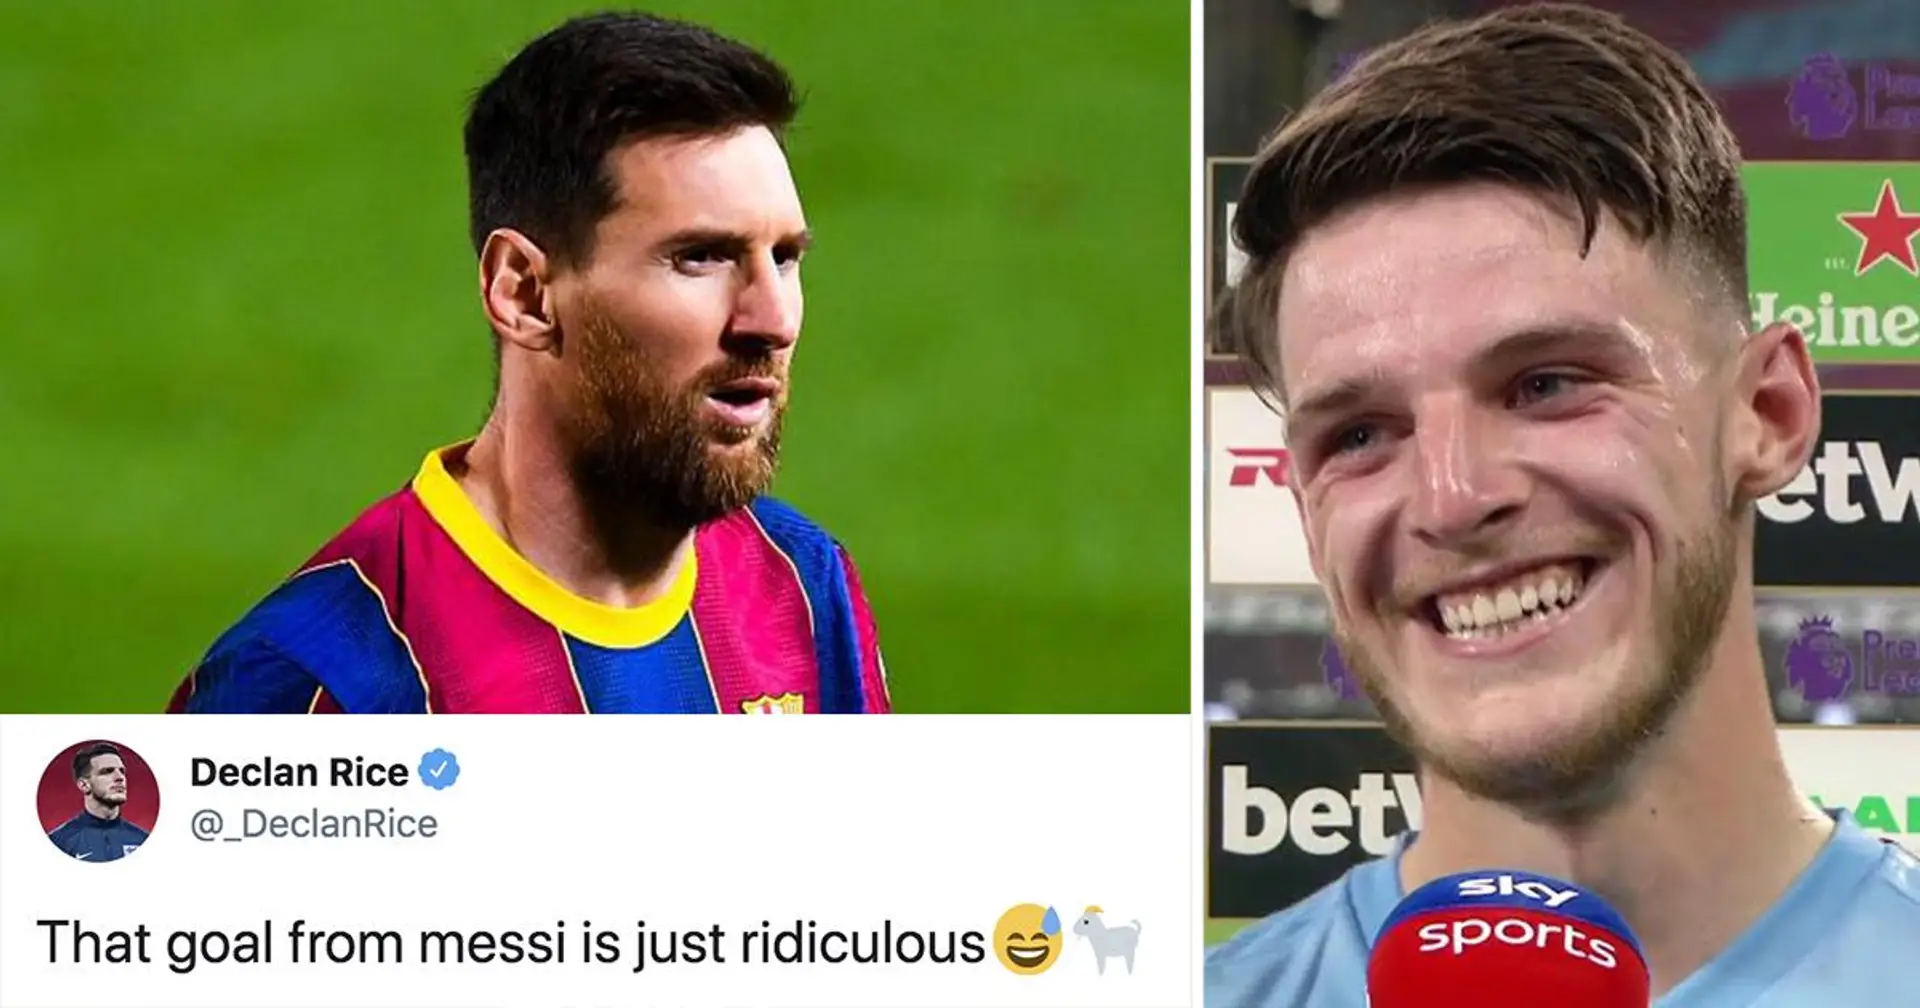 La star de West Ham, Declan Rice, semble être un fervent fan de Messi - ses derniers tweets "aimés" concernent Leo